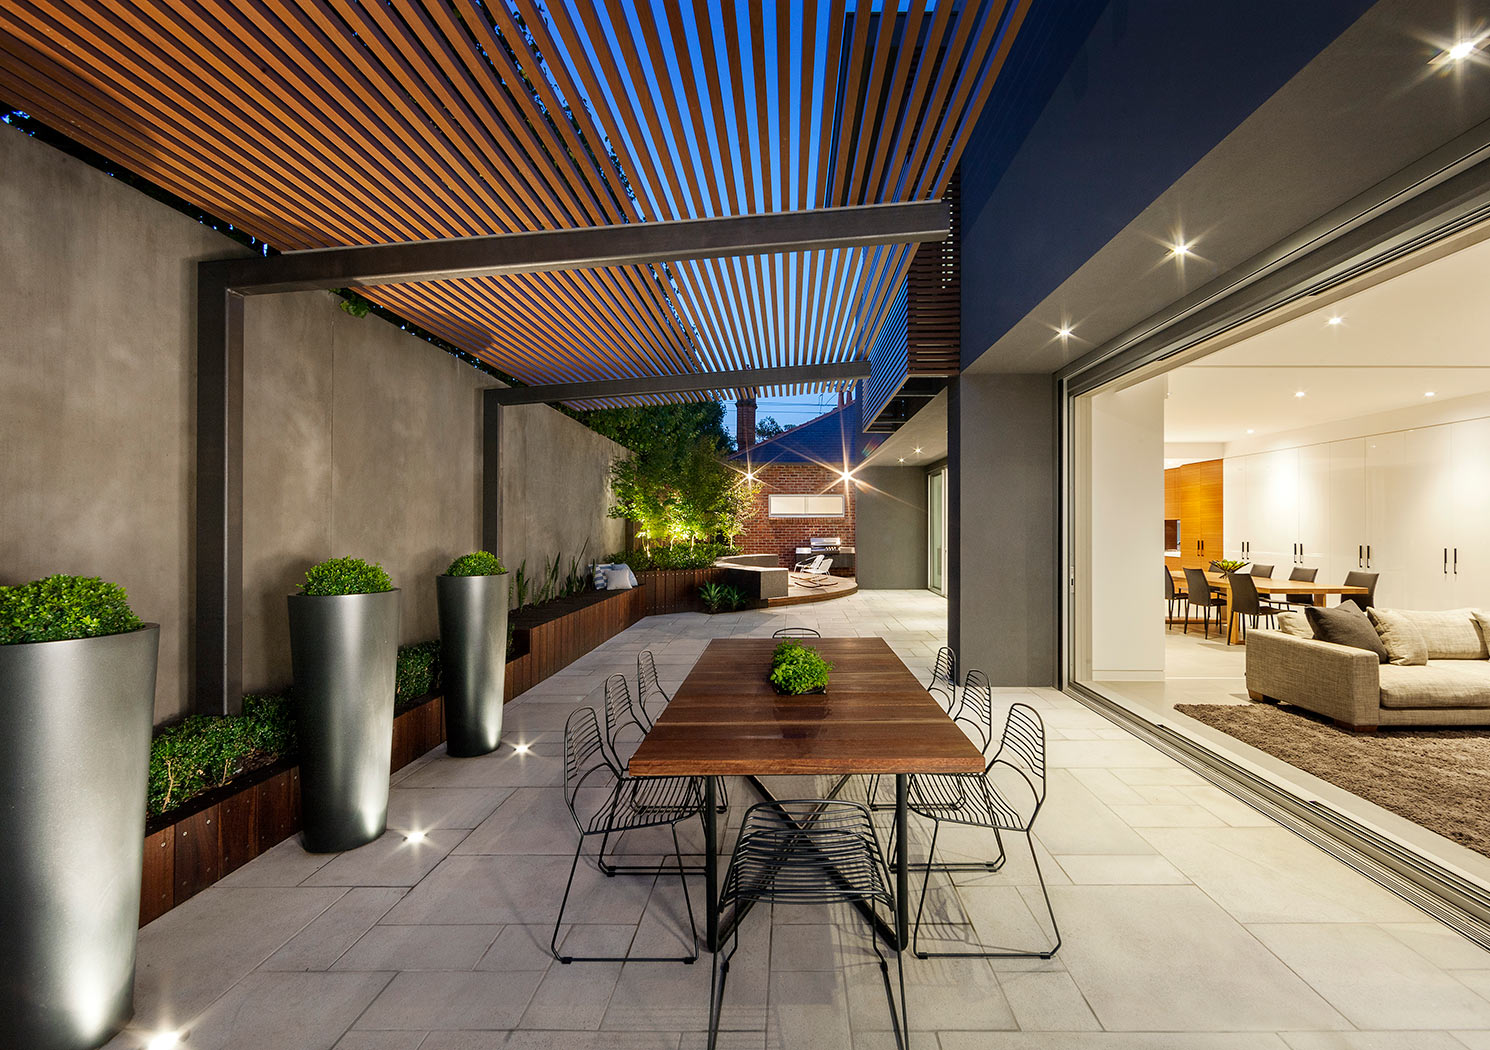 Create a Seamless Indoor-Outdoor Living Flow